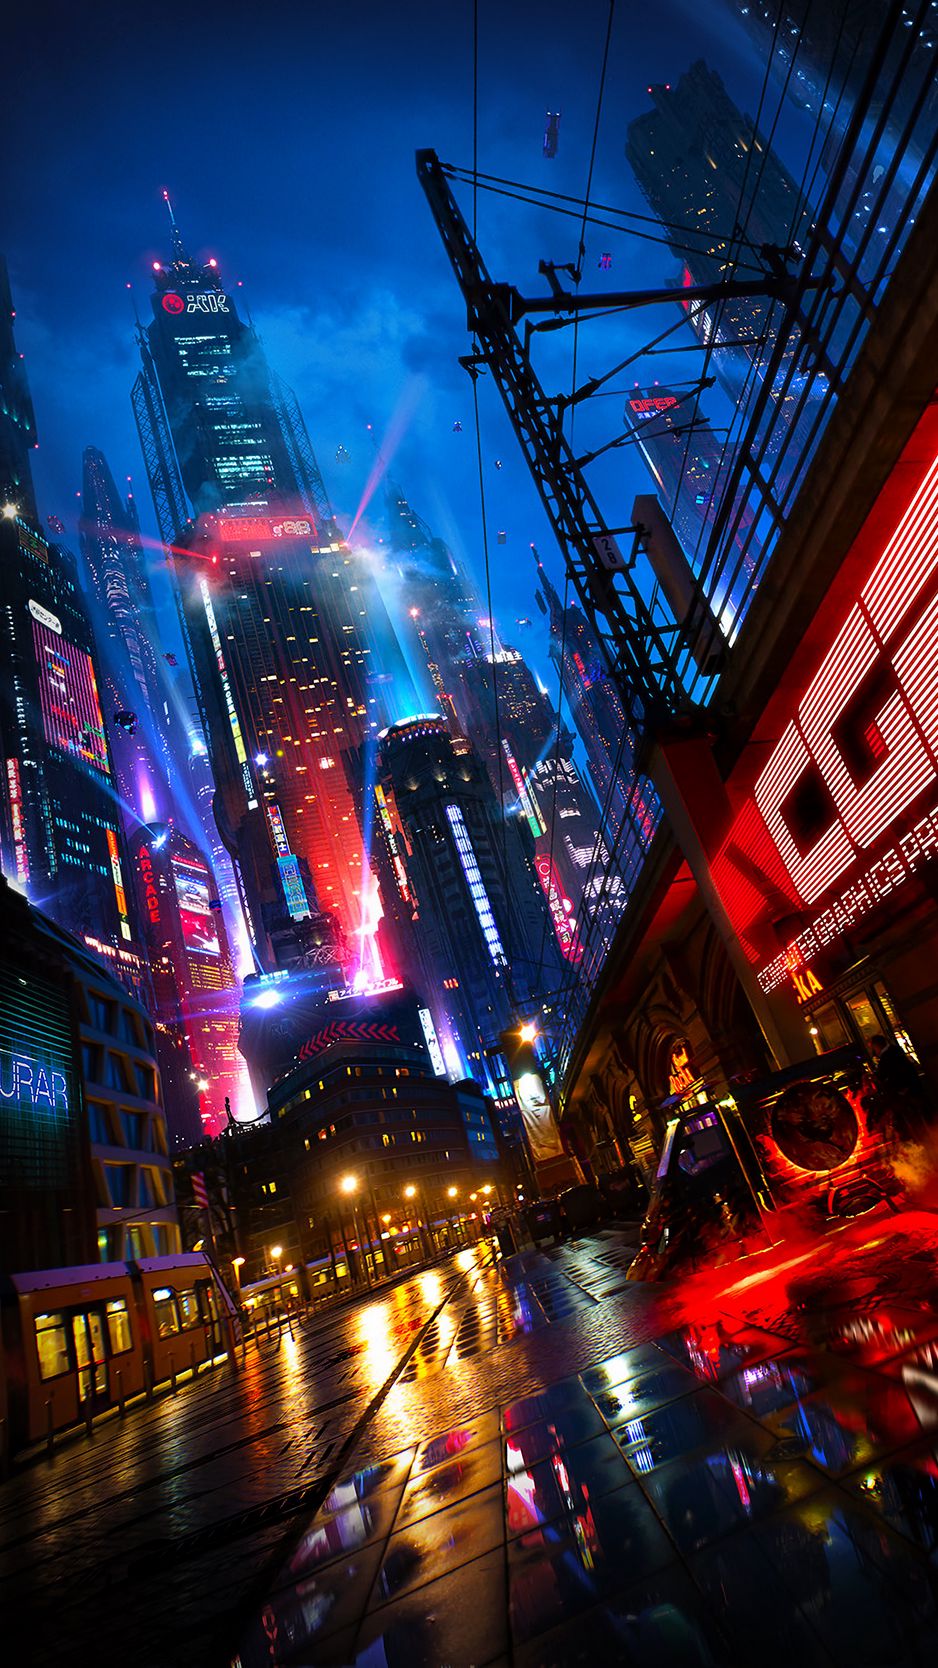 Science Fiction Futuristic Cyberpunk Neon Night City Street Art  Illustration. Modern Sci-Fi Cyber Punk Cityscape Scenery Background.  Digital AI Neural Network Generated Art Fantastic Wallpaper Stock  Illustration | Adobe Stock